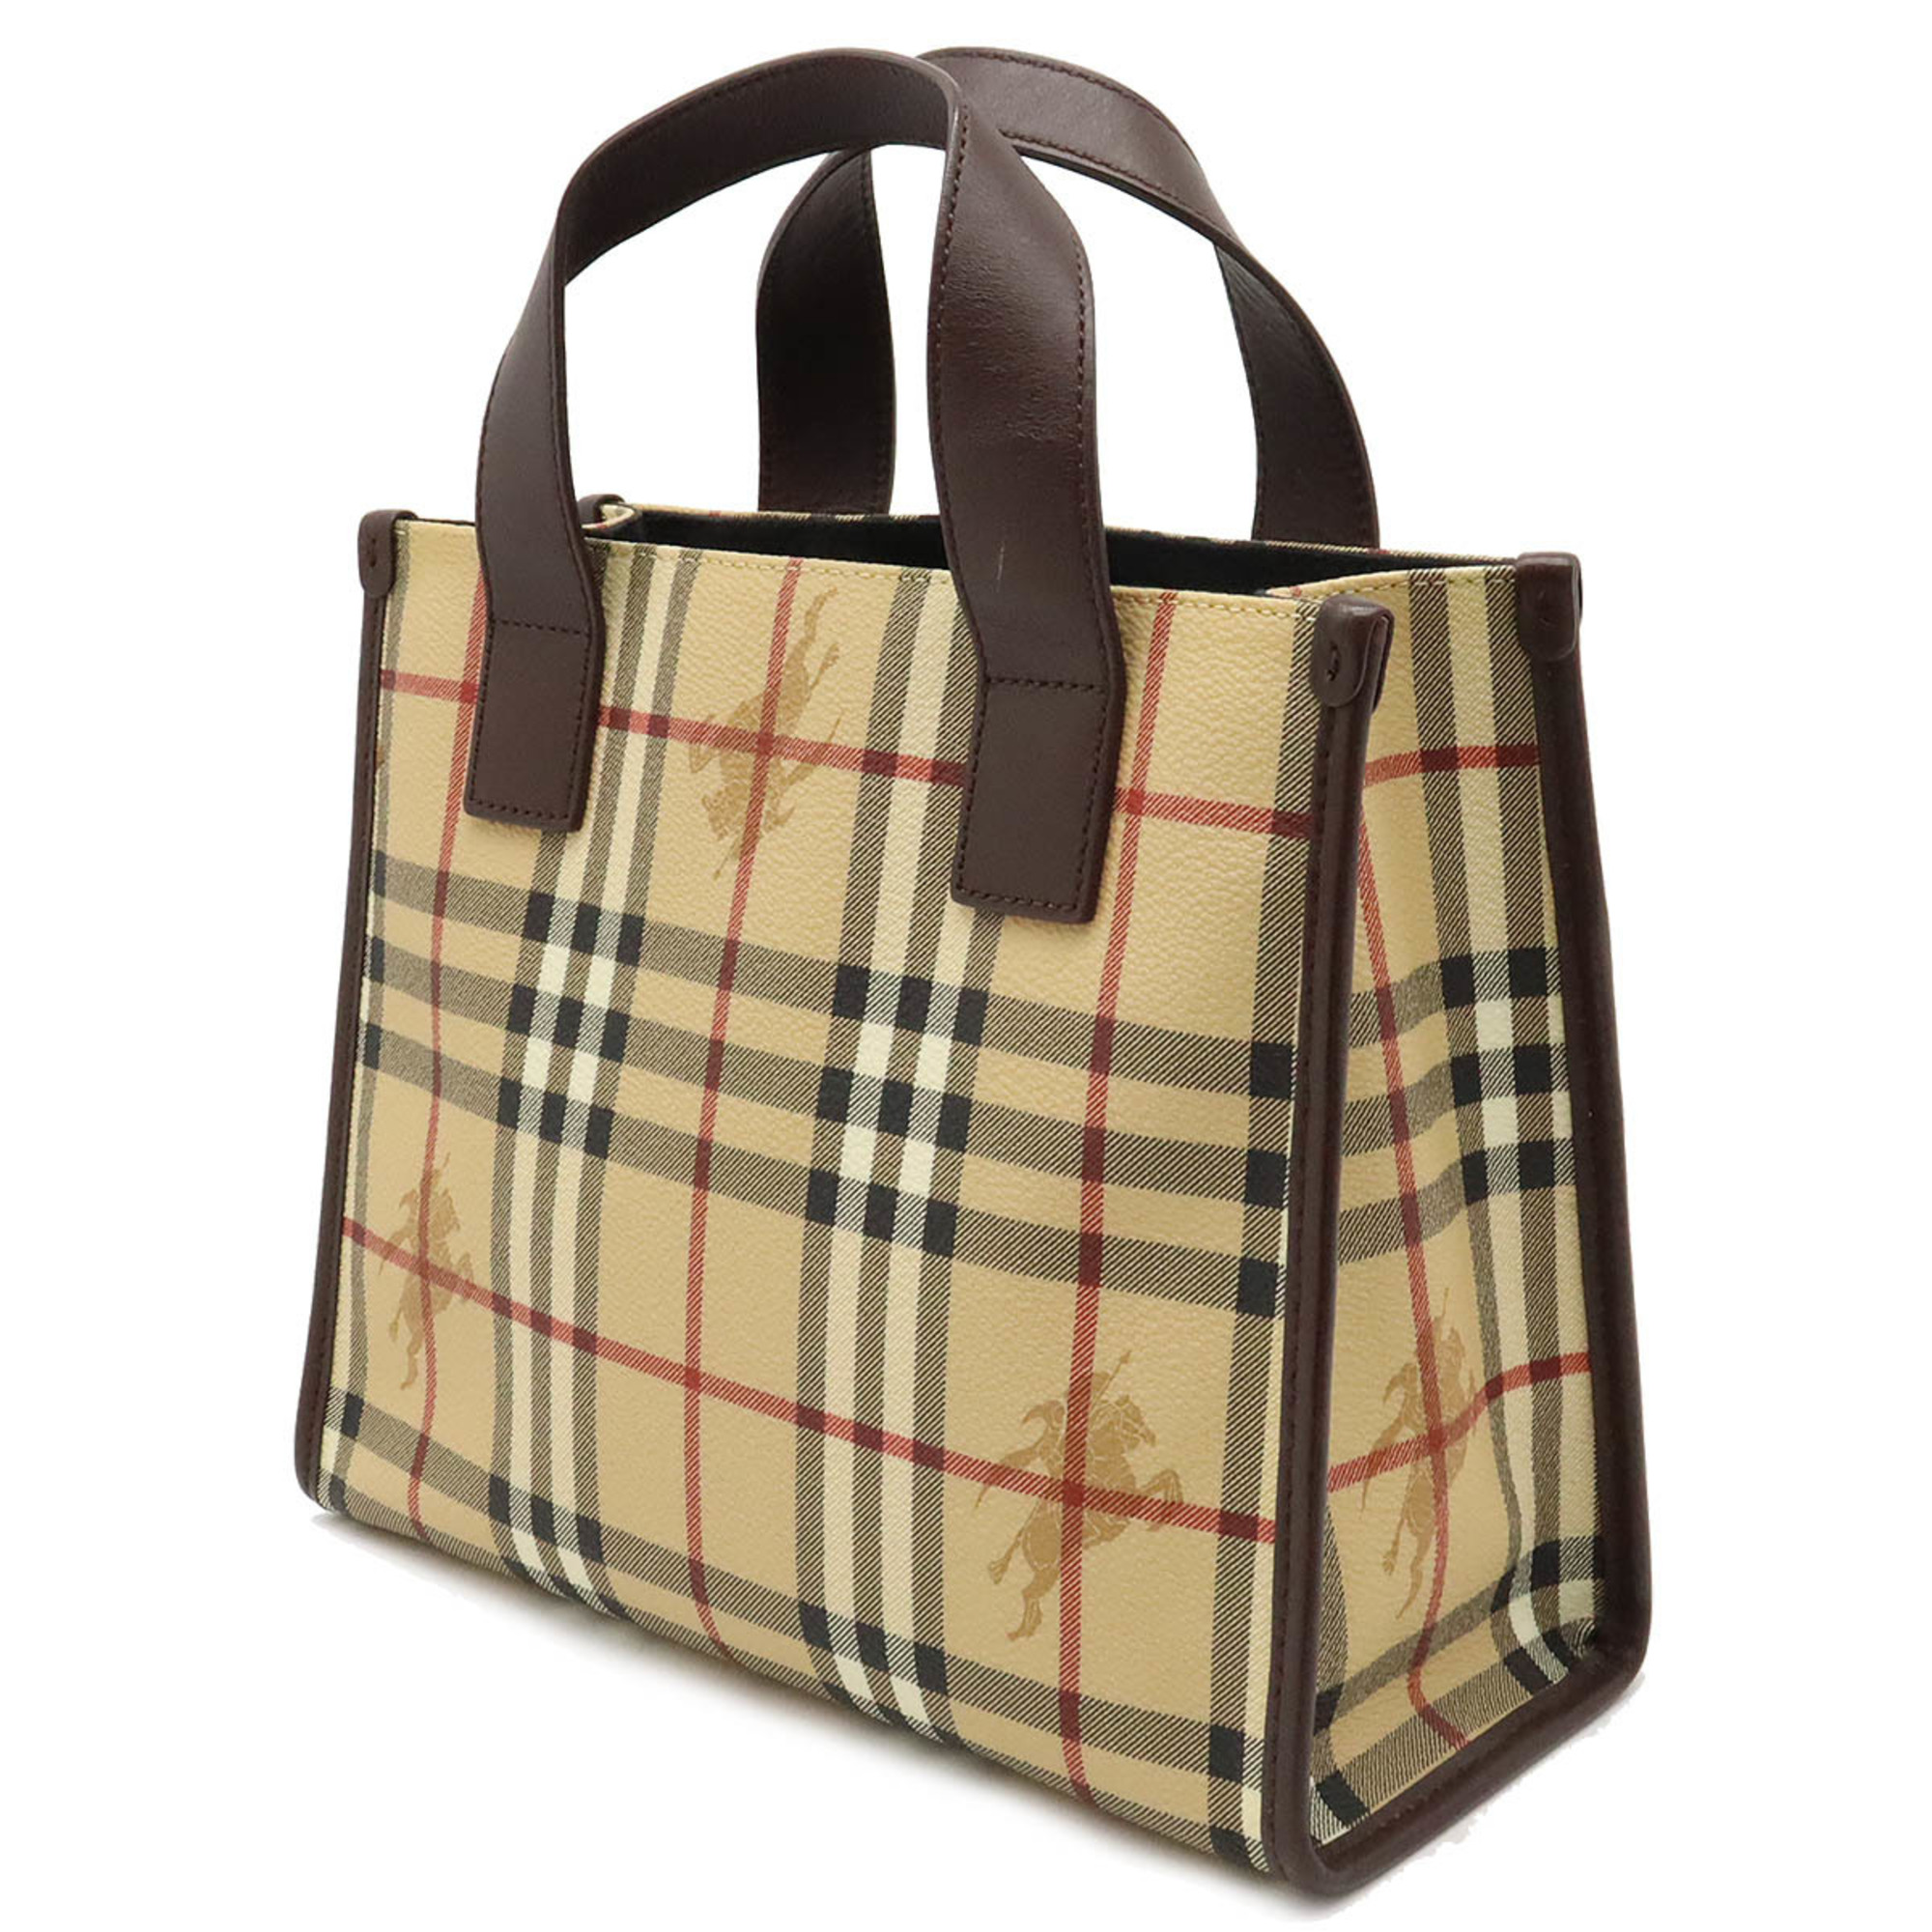 BURBERRY Nova Check Pattern Tote Bag Handbag PVC Leather Beige Dark Brown Red